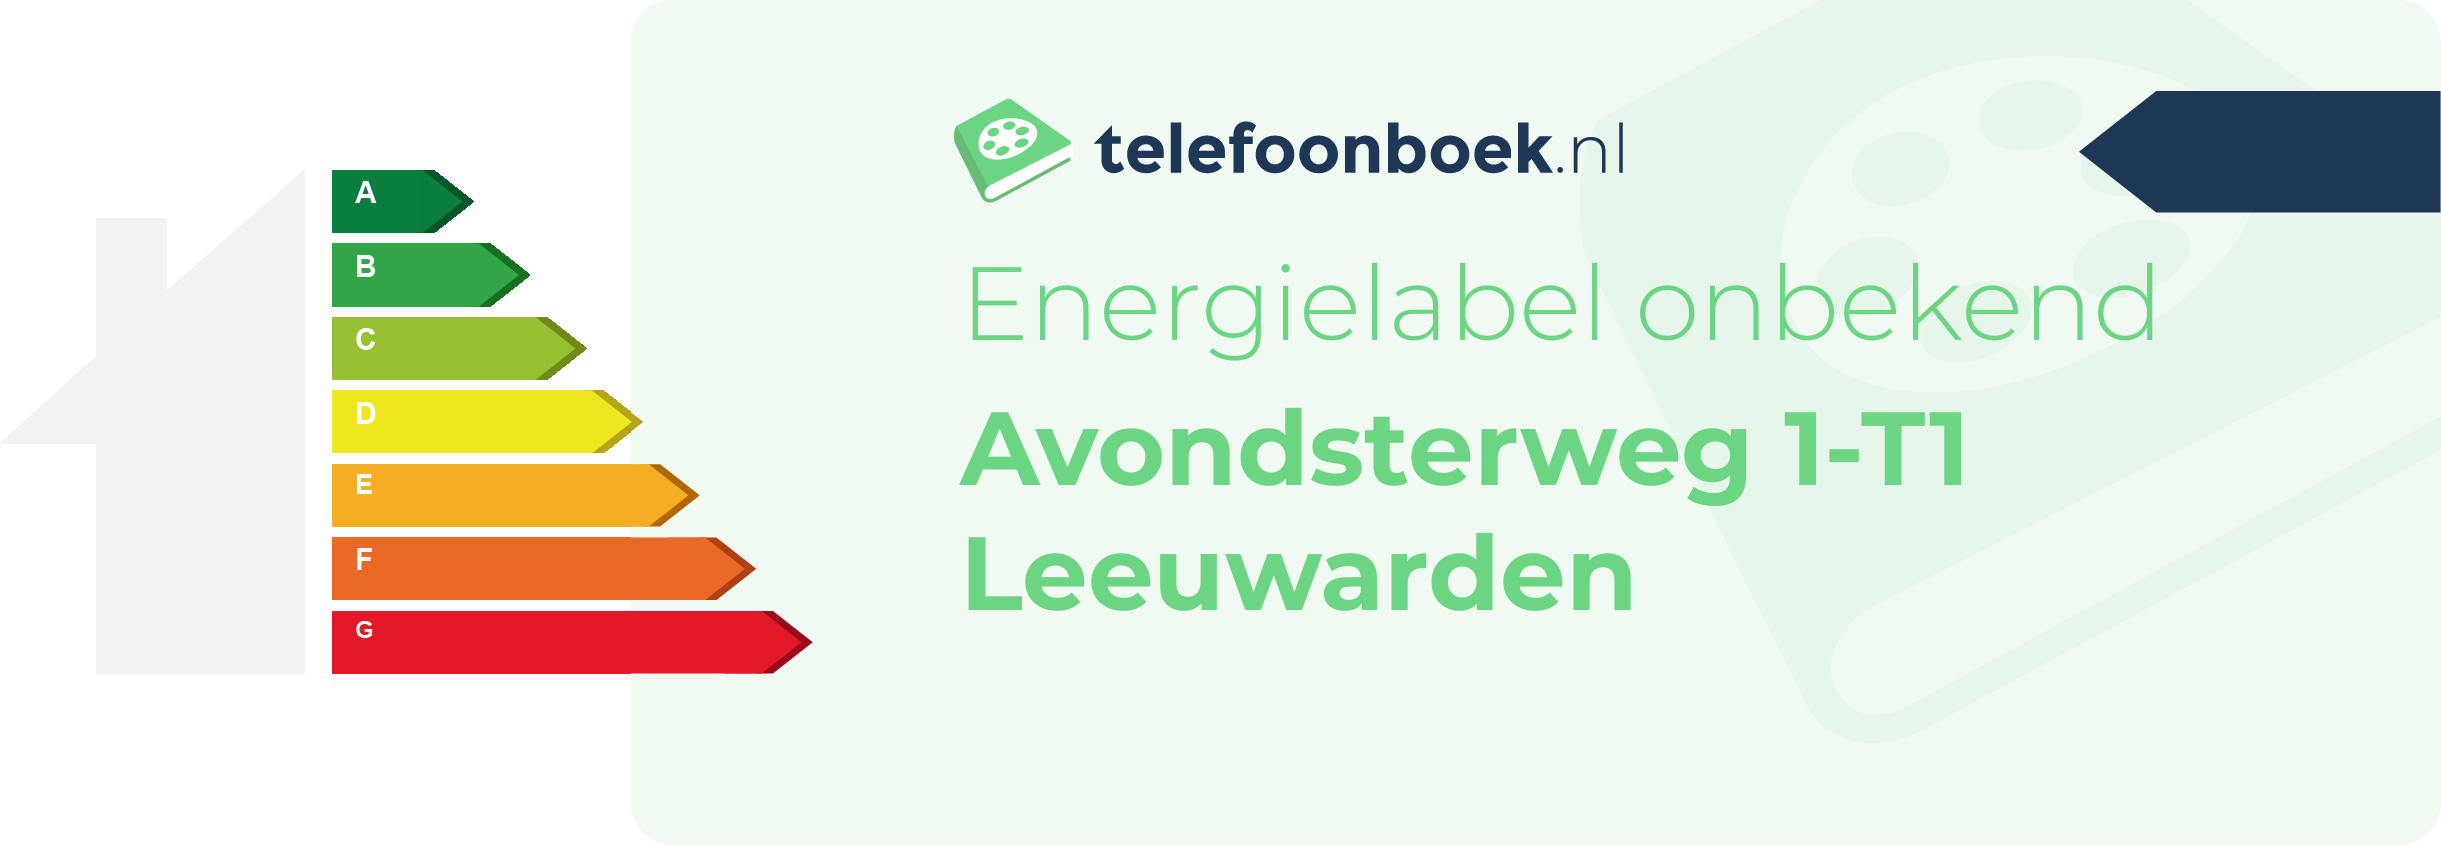 Energielabel Avondsterweg 1-T1 Leeuwarden